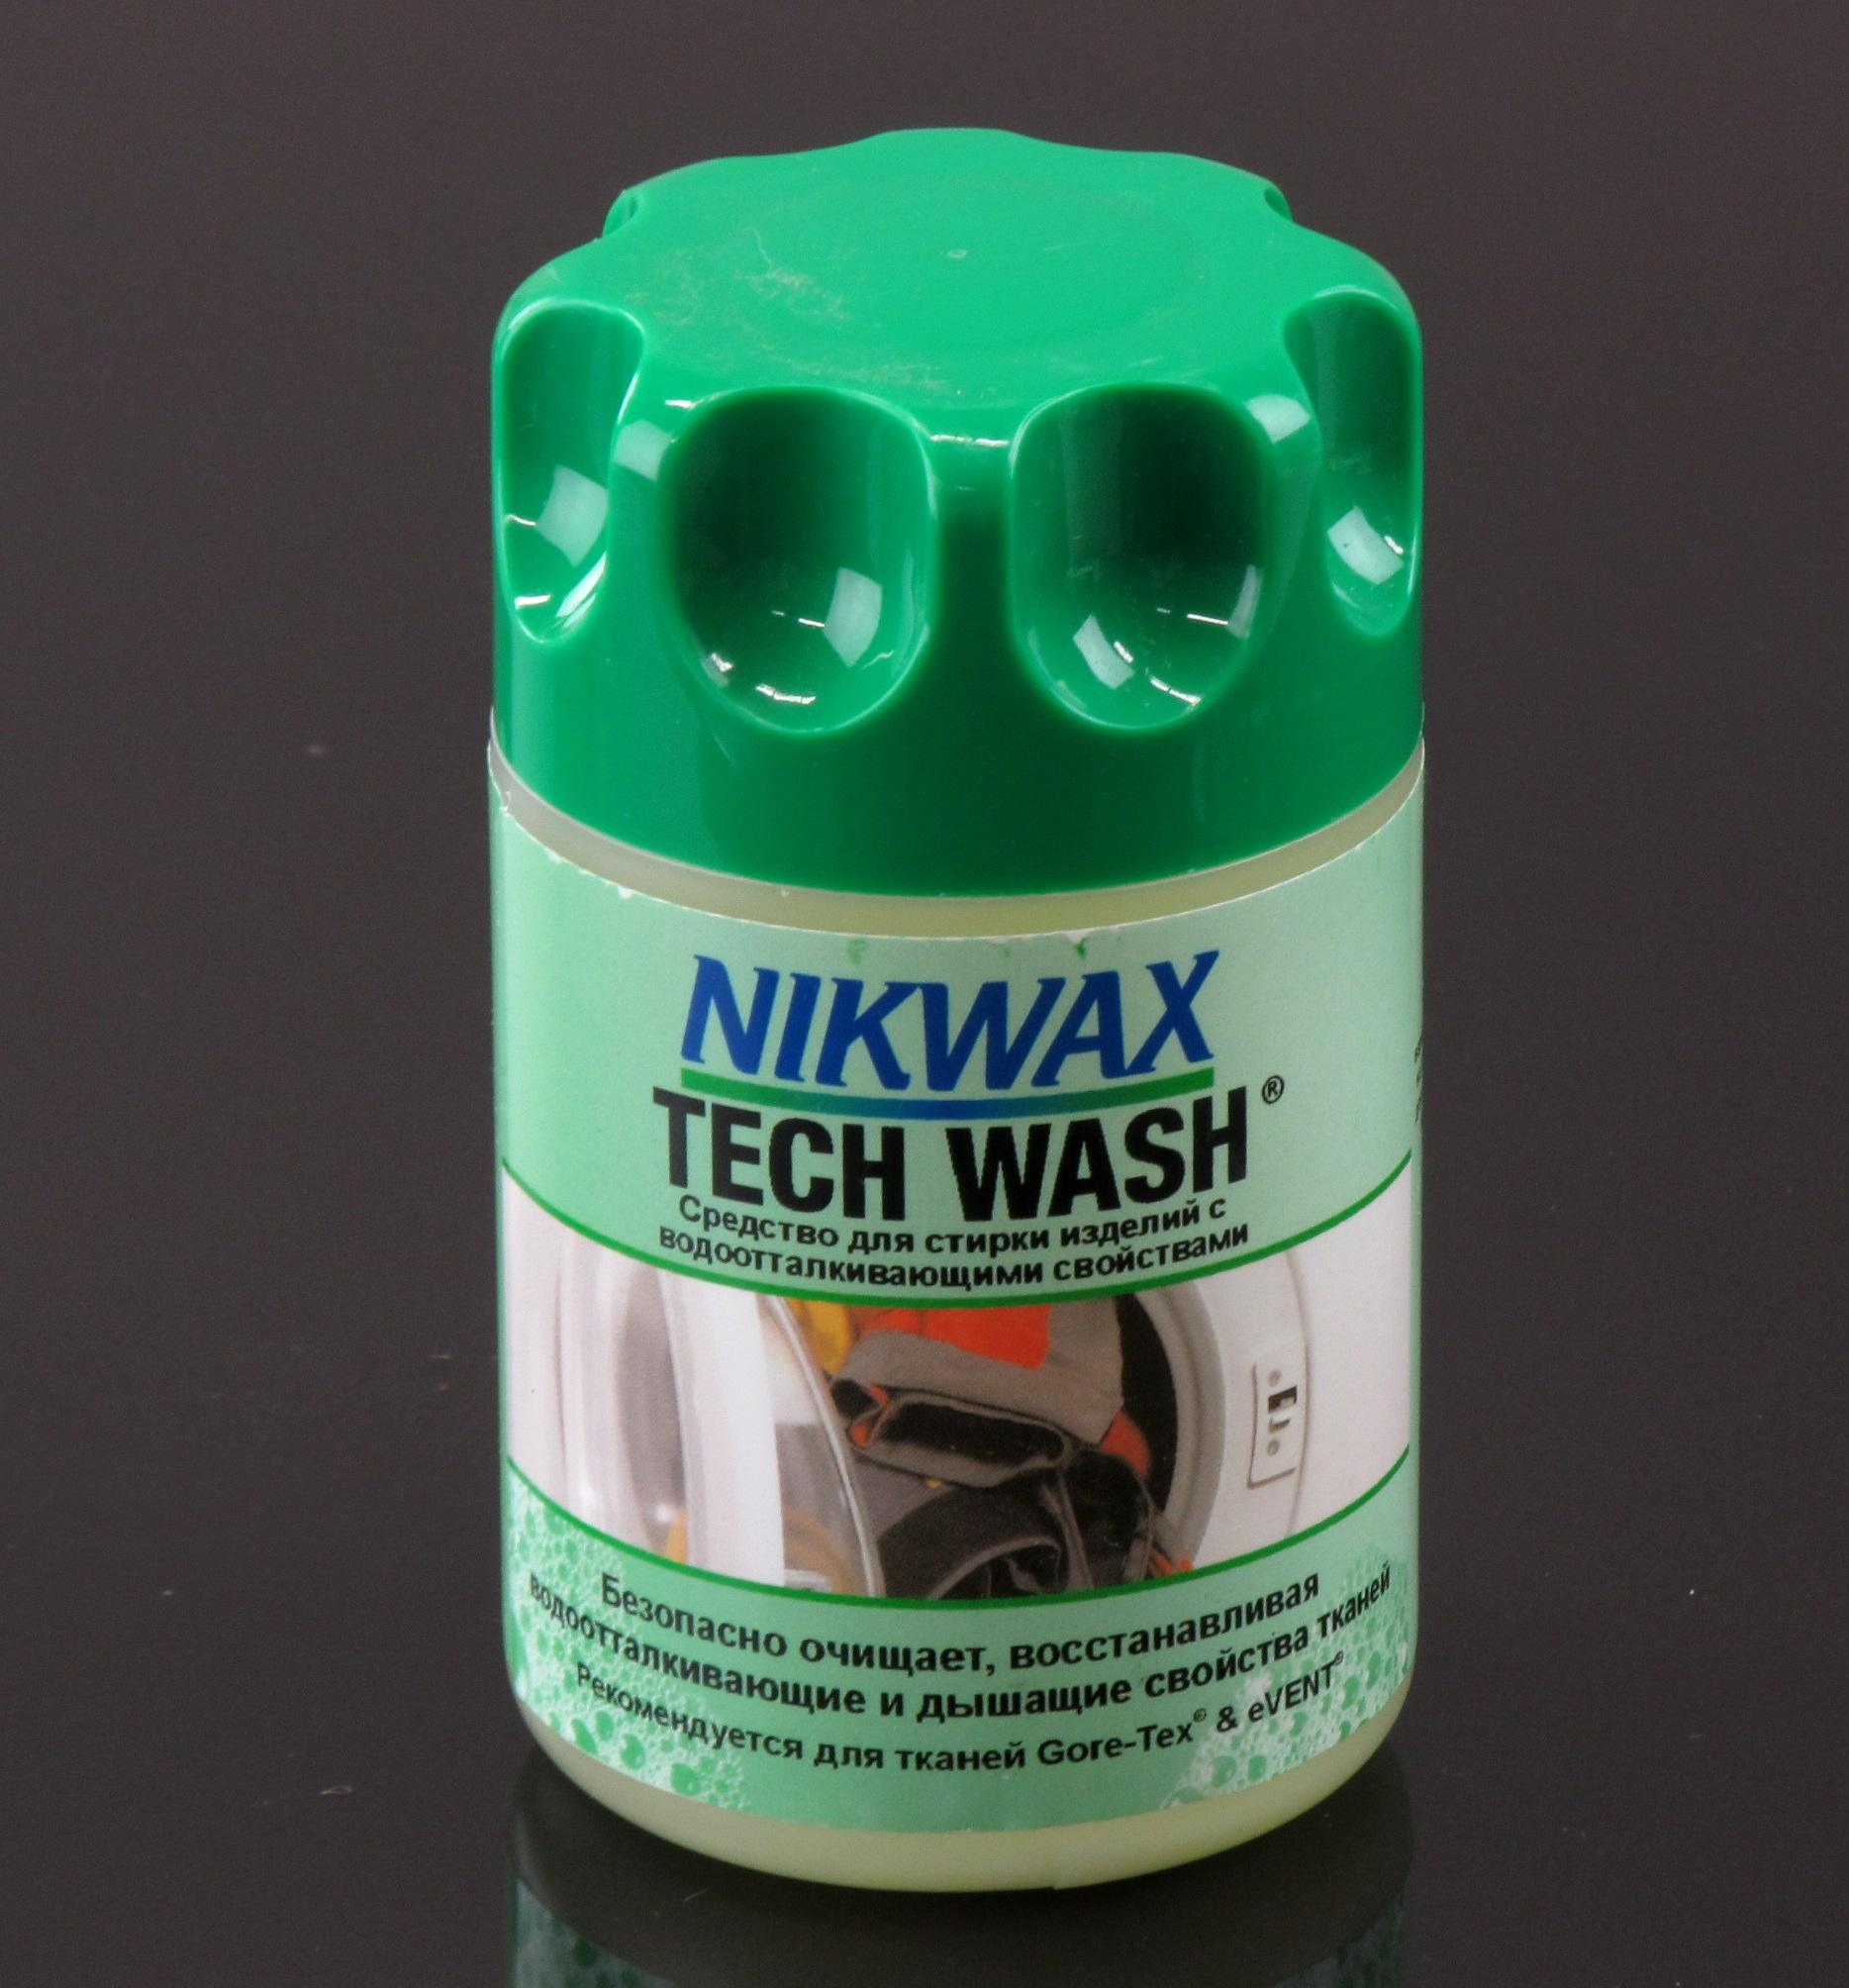 Nikwax Tech Wash (средство для стирки мембран) (баллон 150 мл).jpg